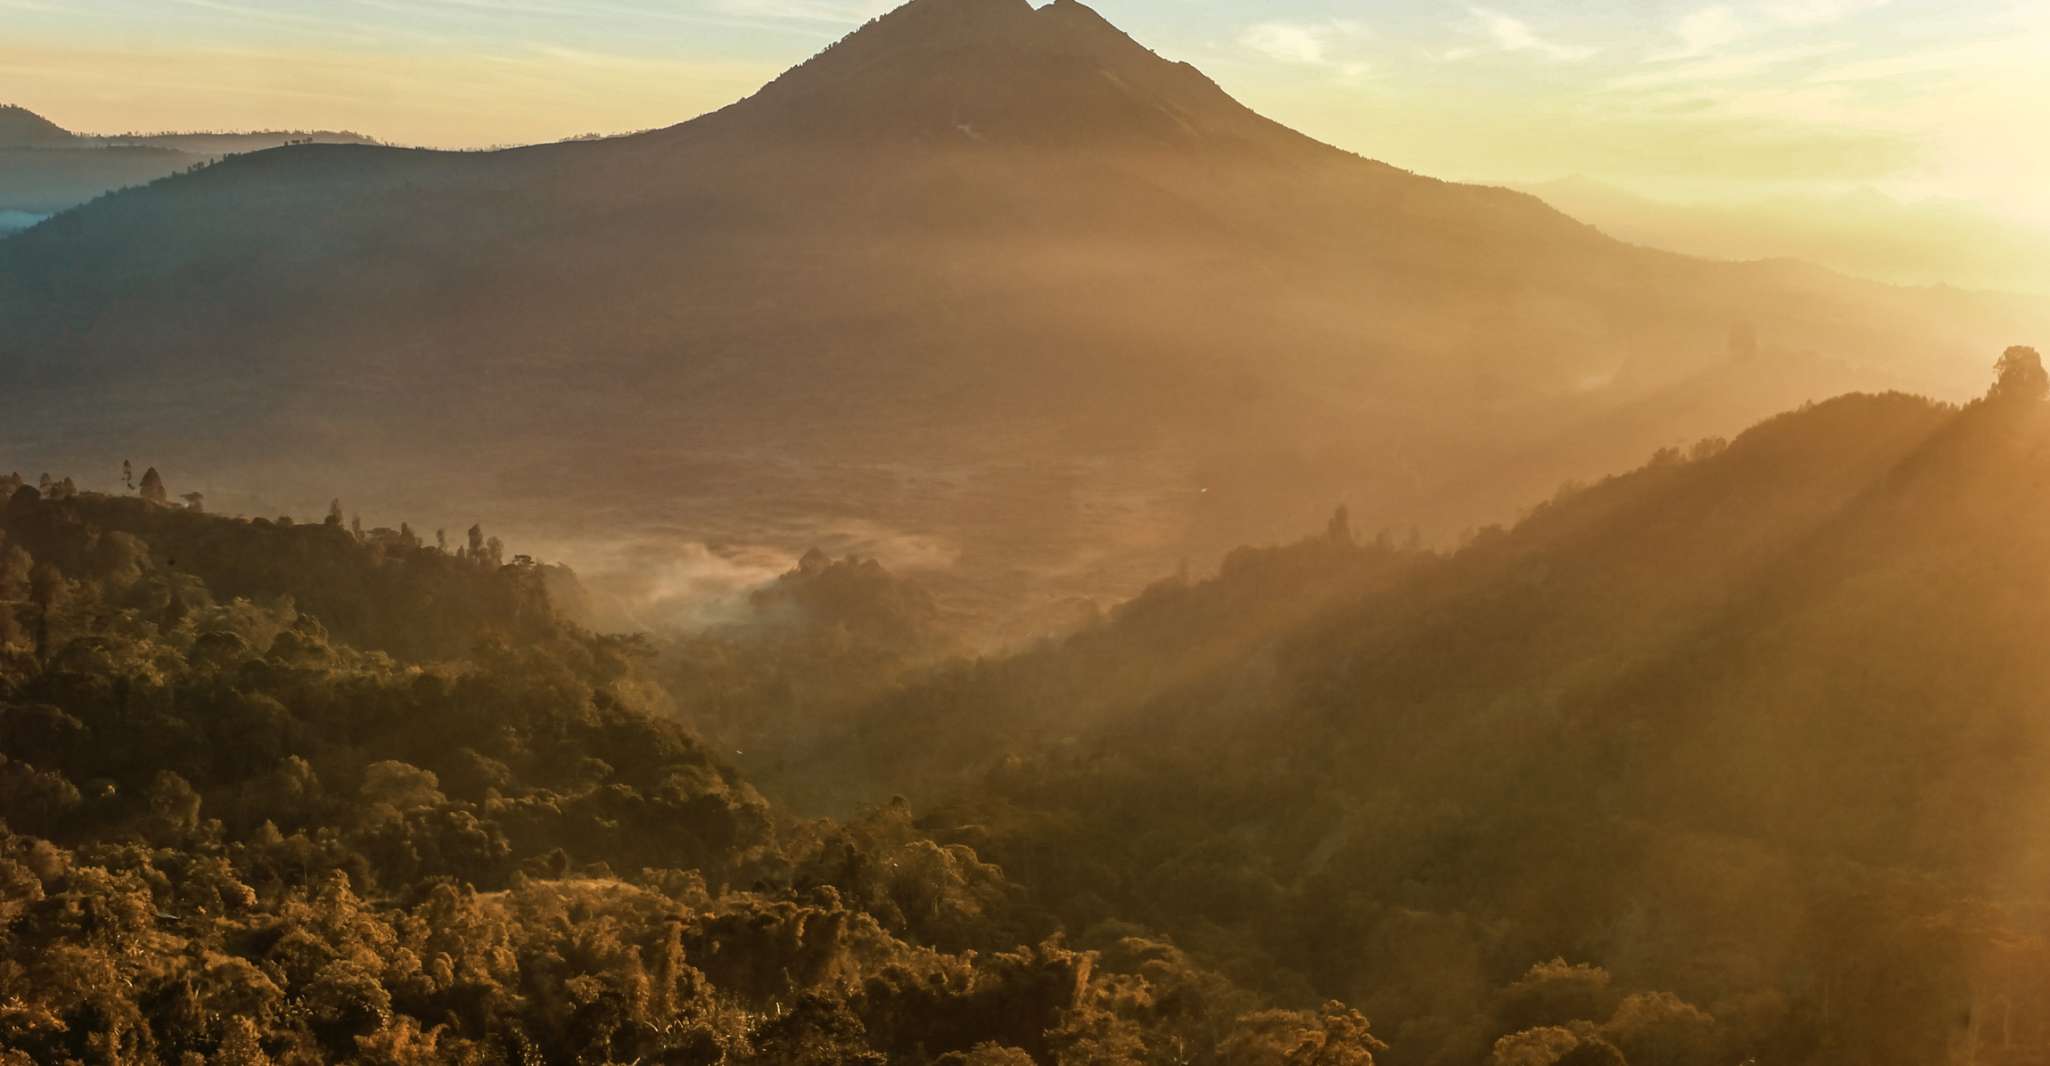 Bali, Mount Batur Sunrise Trek With Guide and Breakfast - Housity